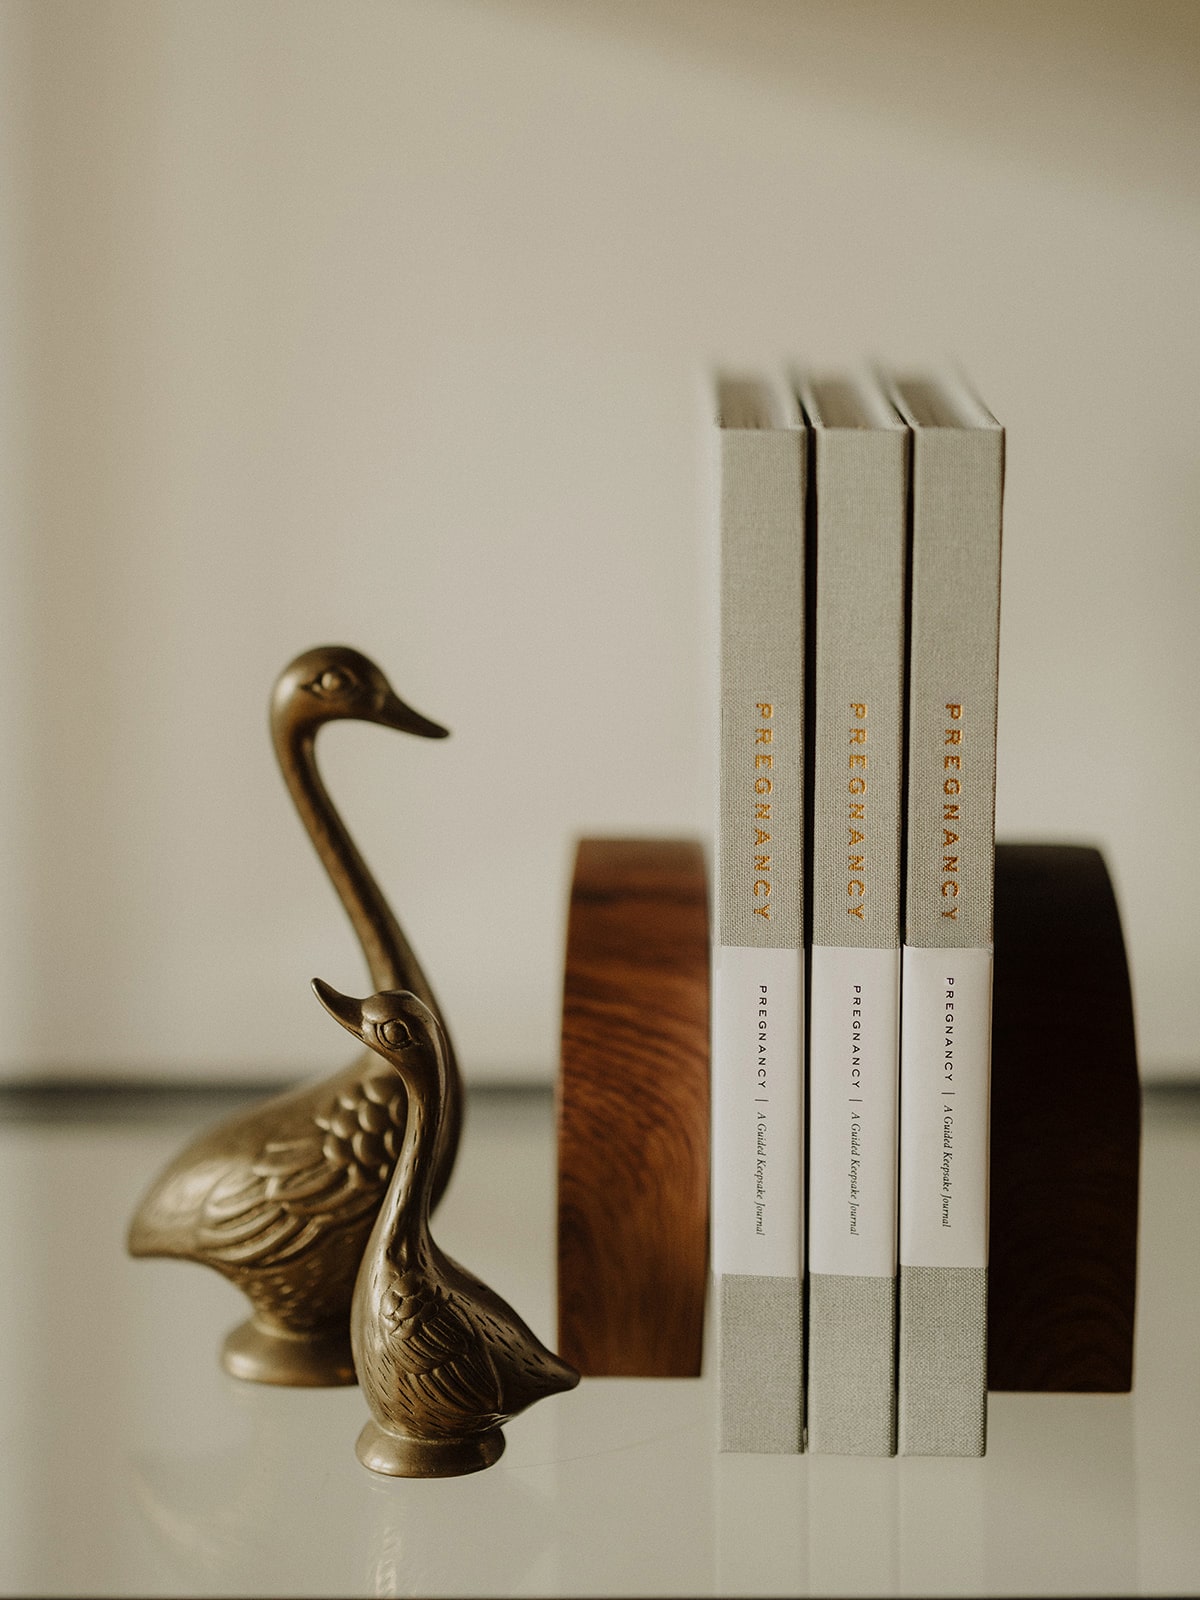 Three Pregnancy Journals on a shelf with brass duck decor